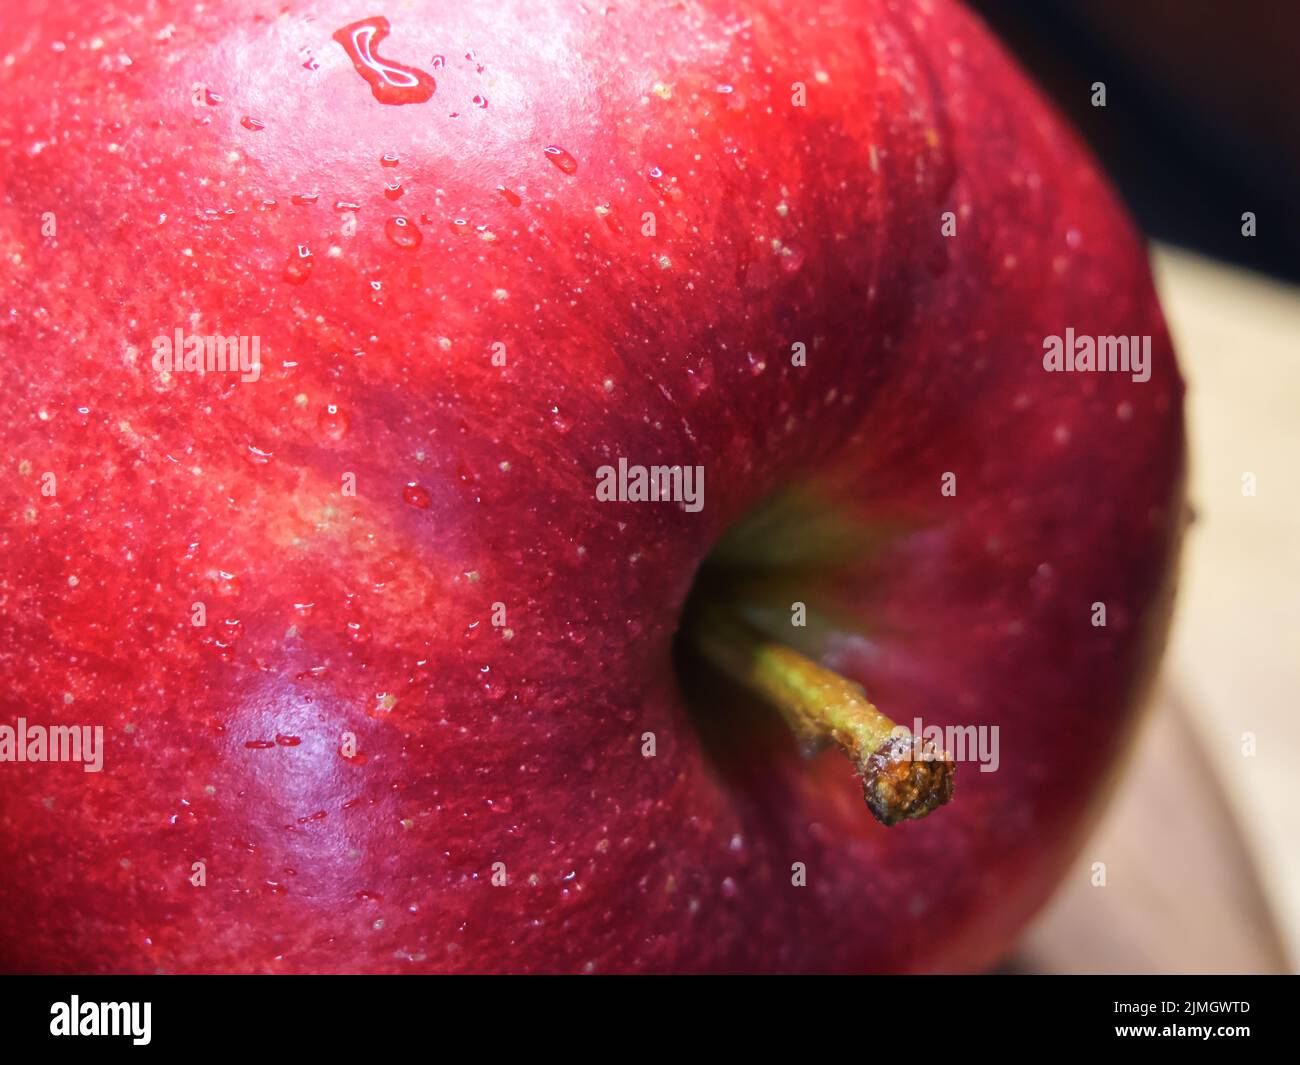 Big ripe red apple, macro shot. Drops of water on an apple peel. A beautiful fruit. Stock Photo